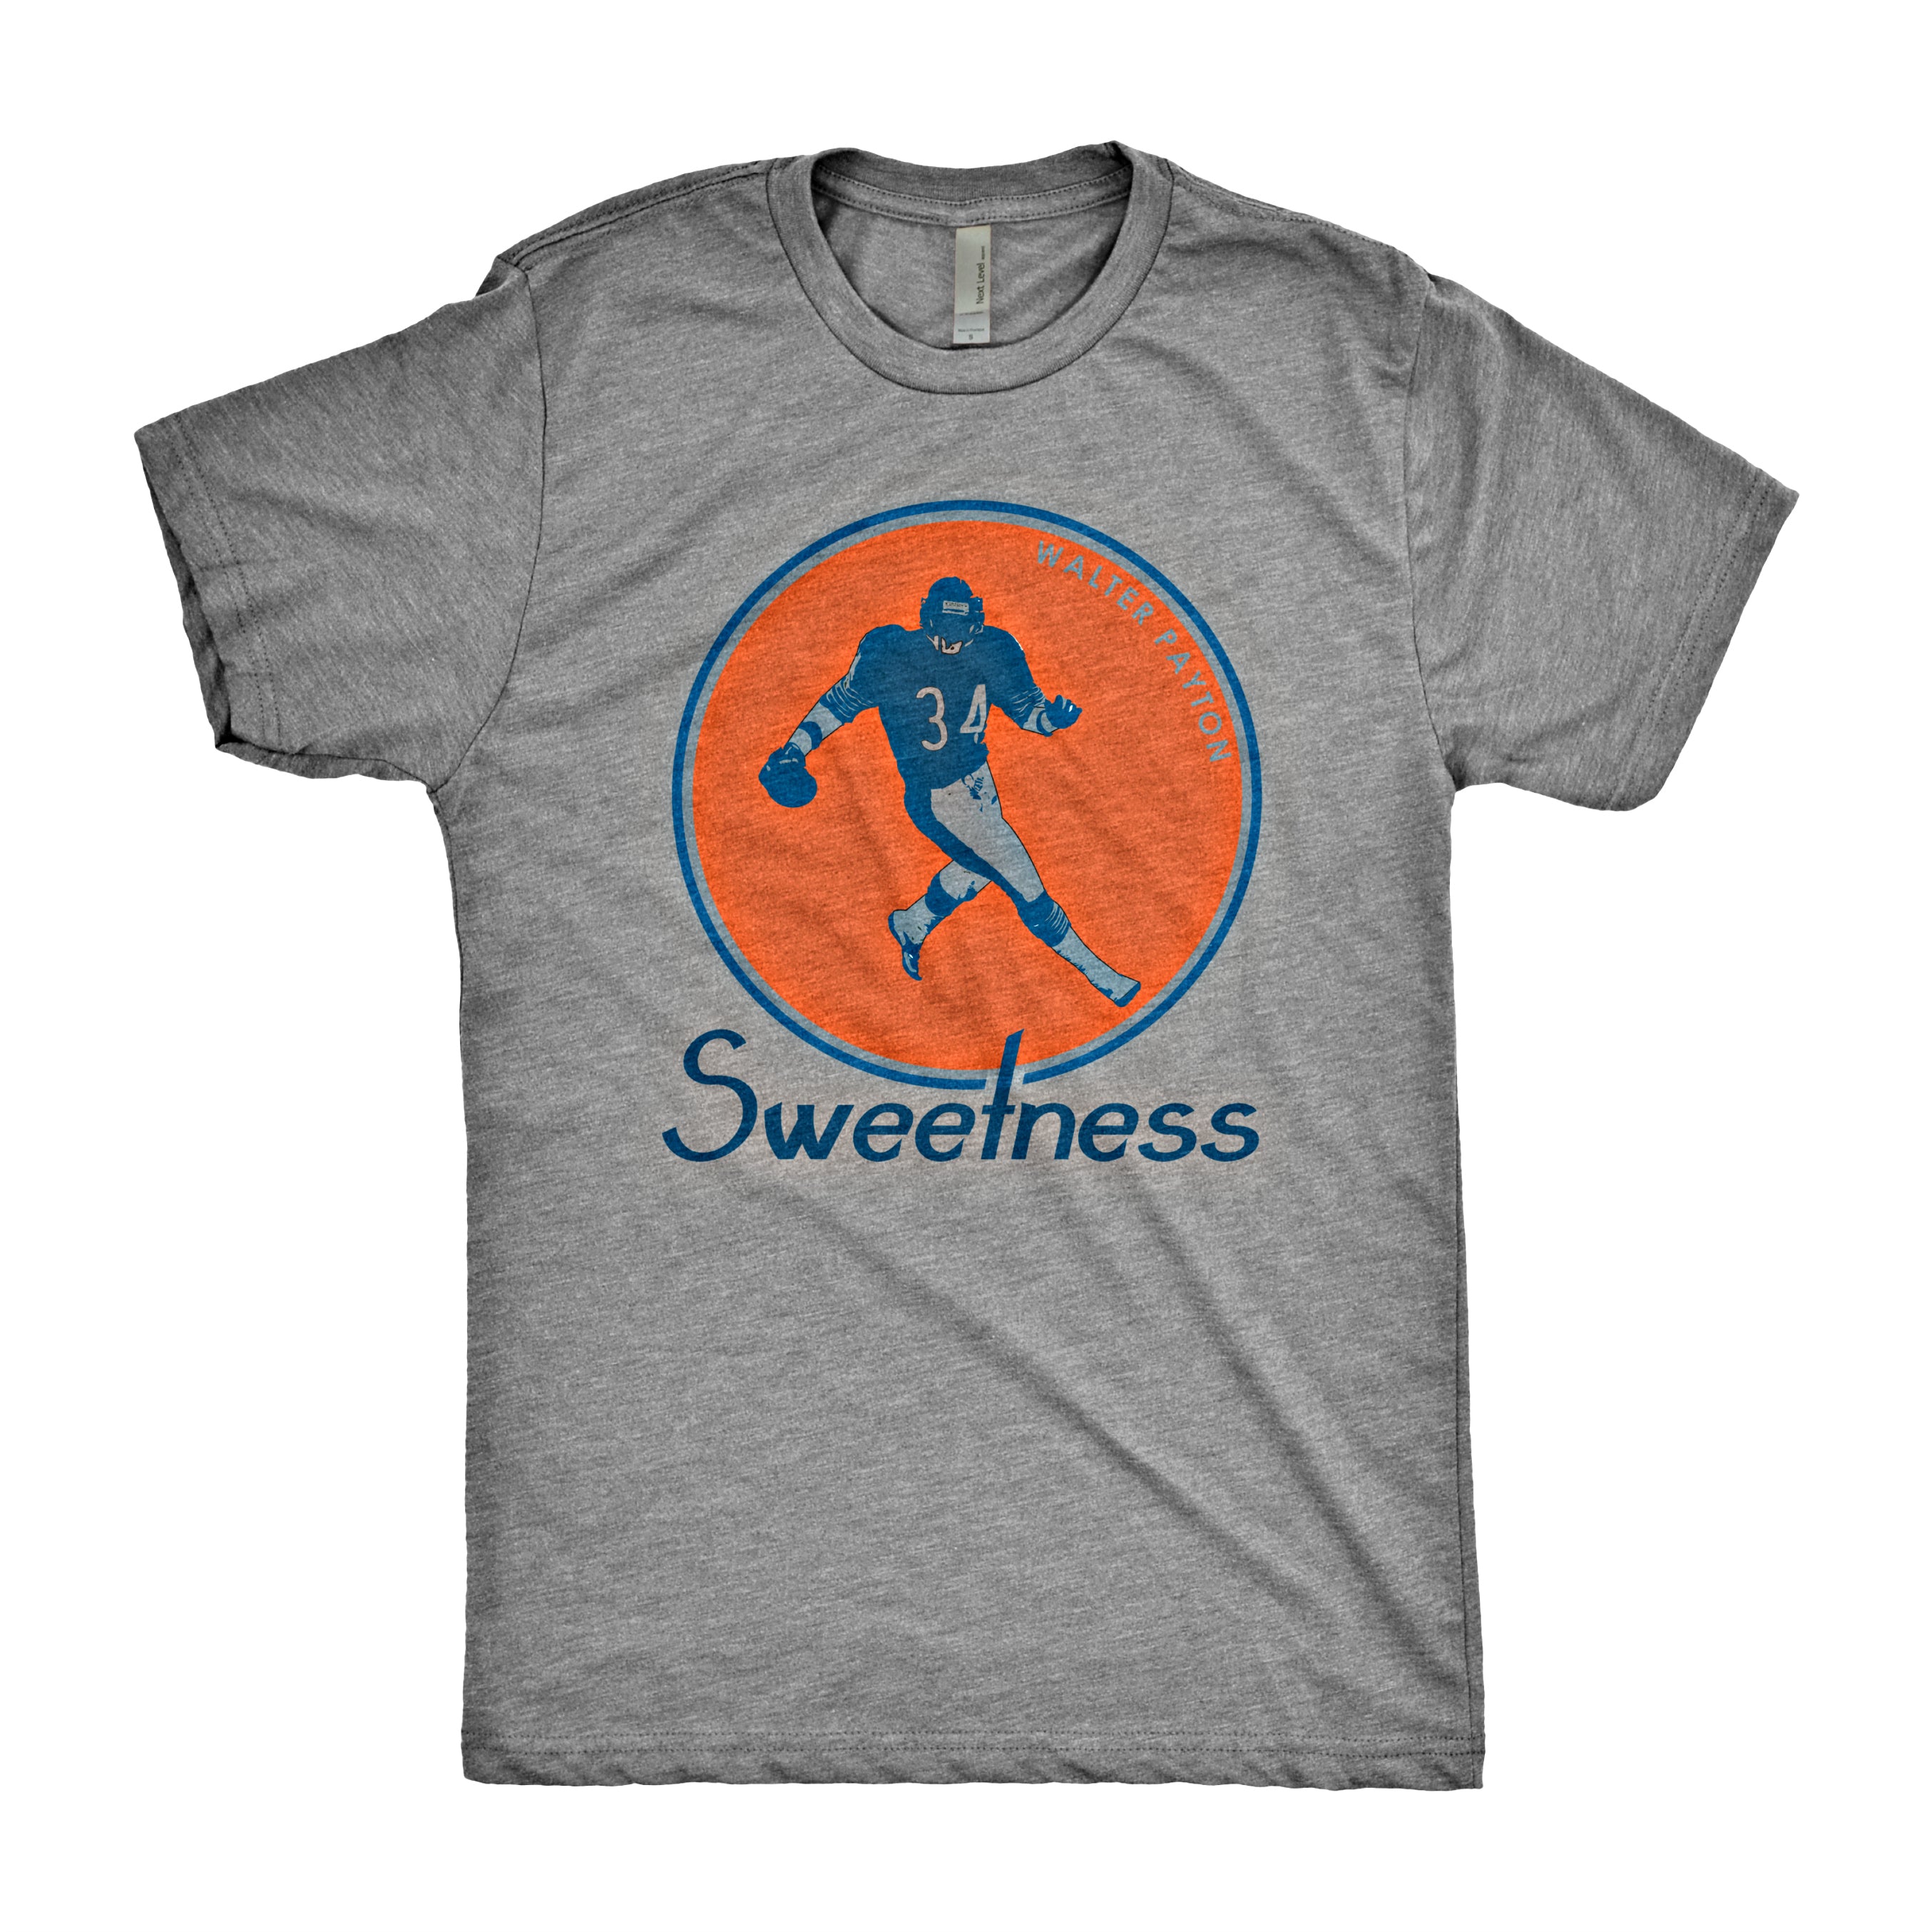 Sweetness Shirt